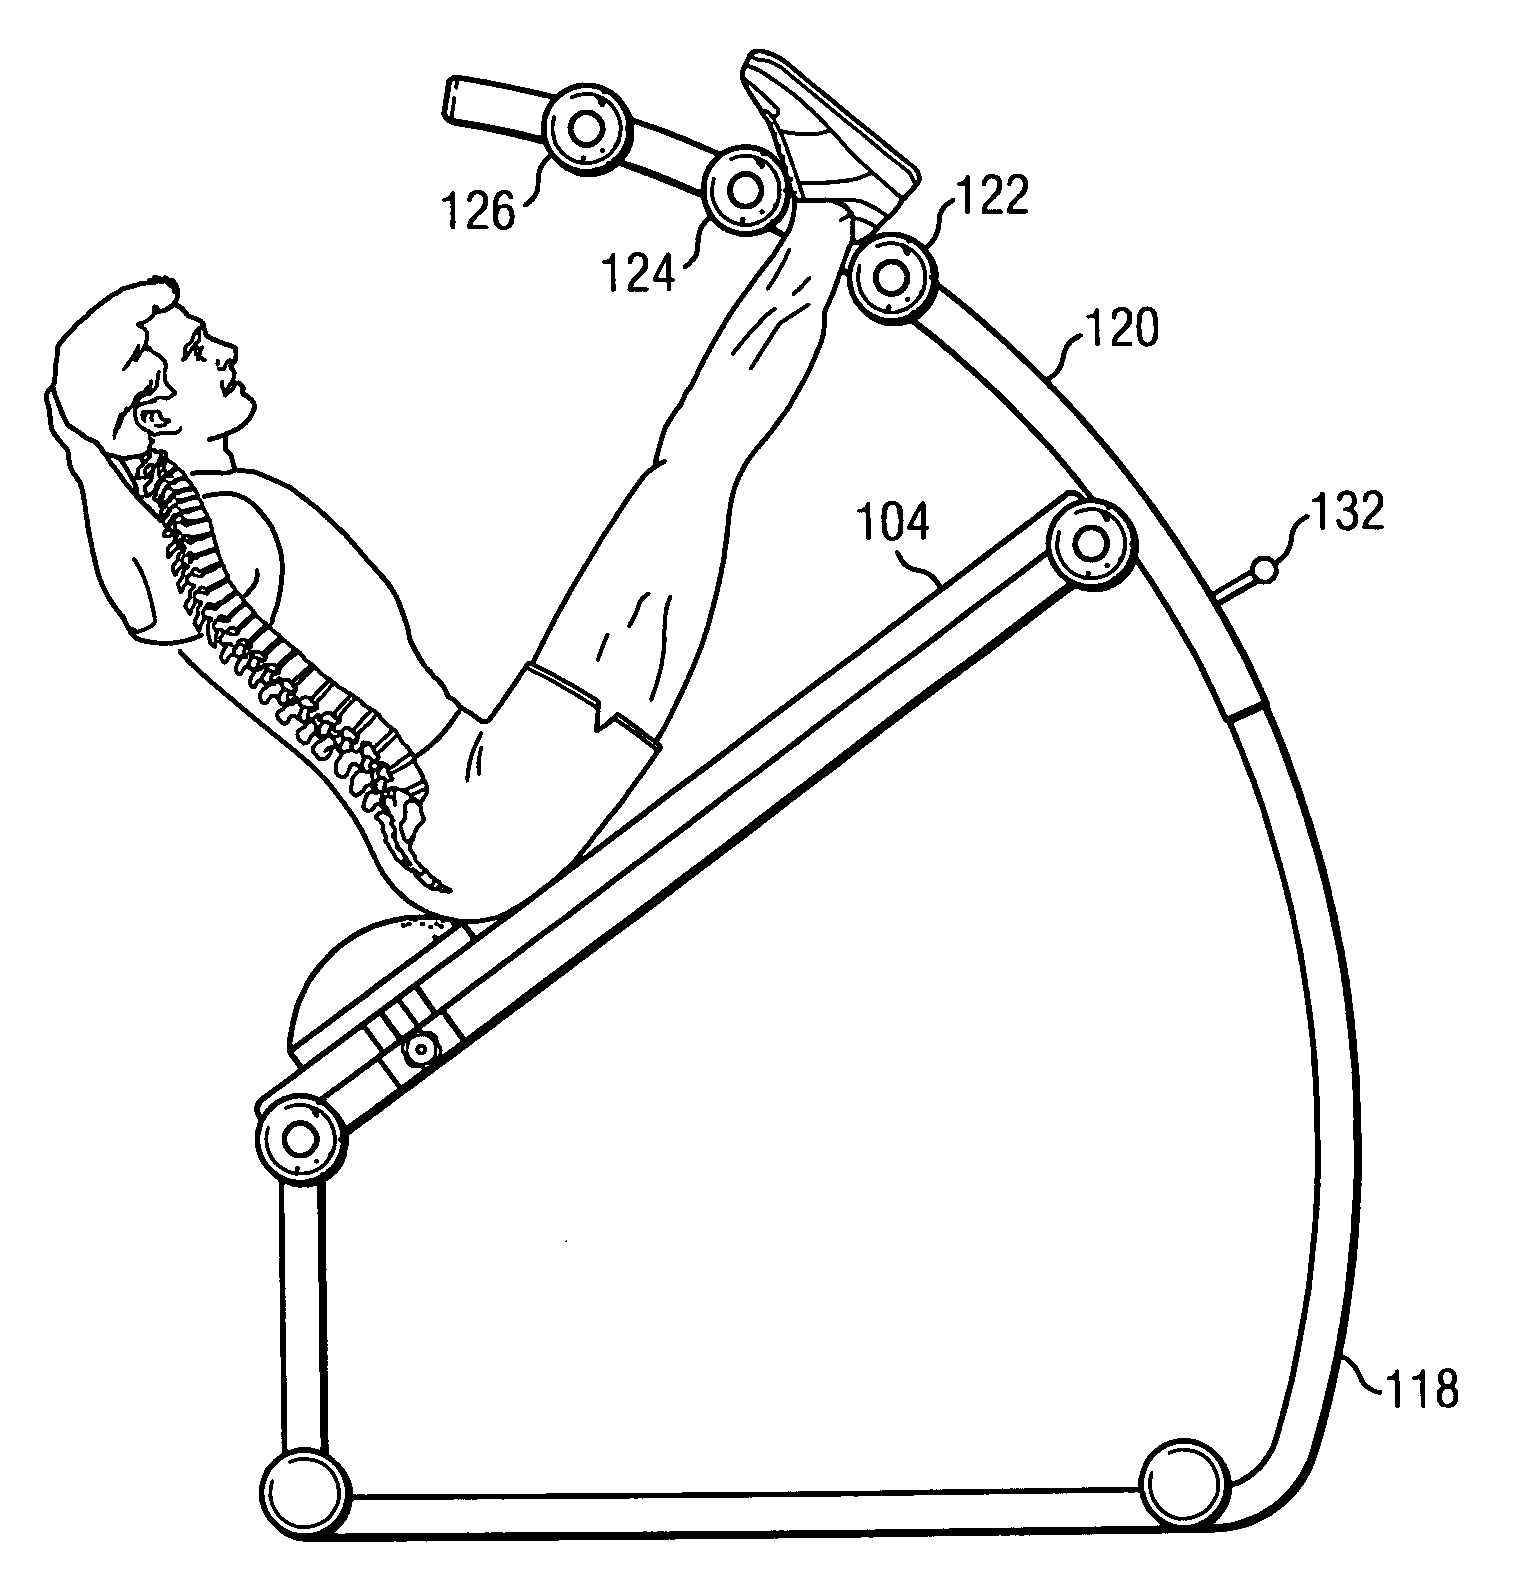 Abdominal exercising apparatus and method